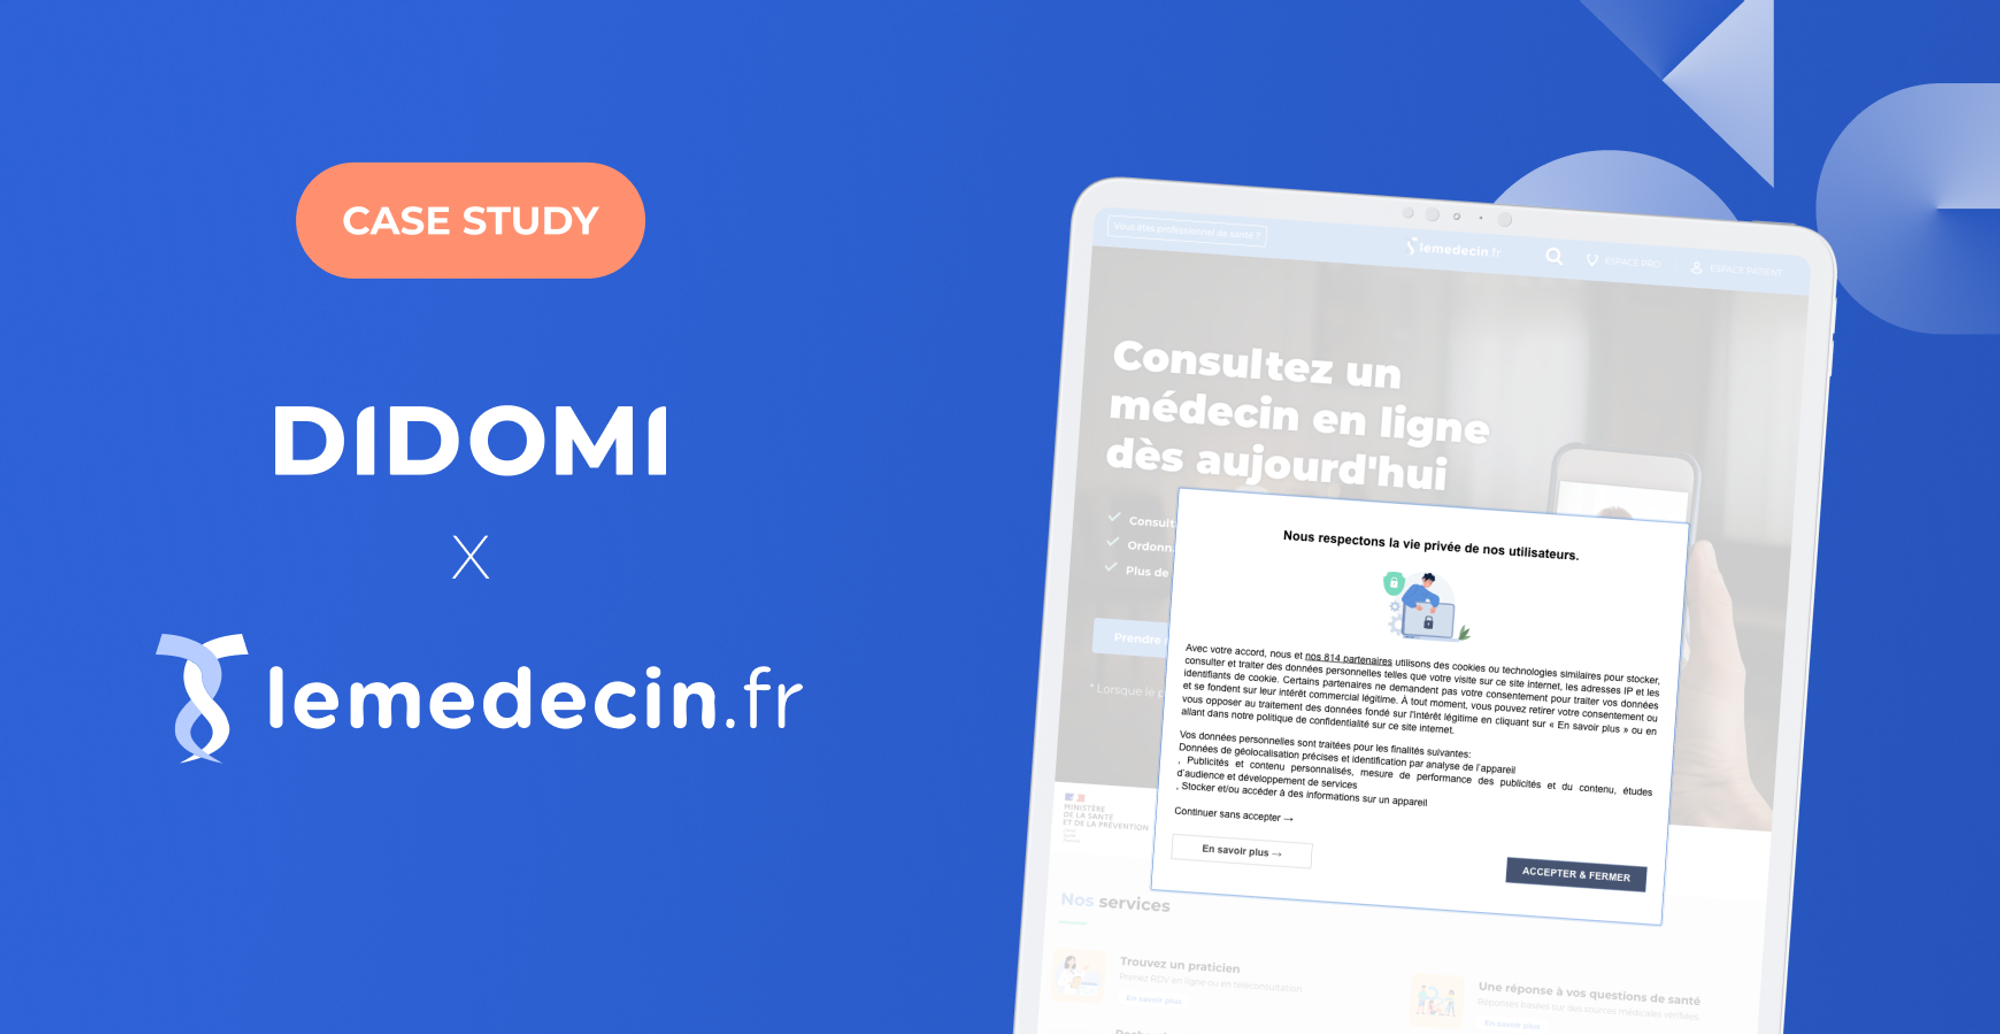 Lemedecin.fr chooses Didomi's expertise in managing sensitive data